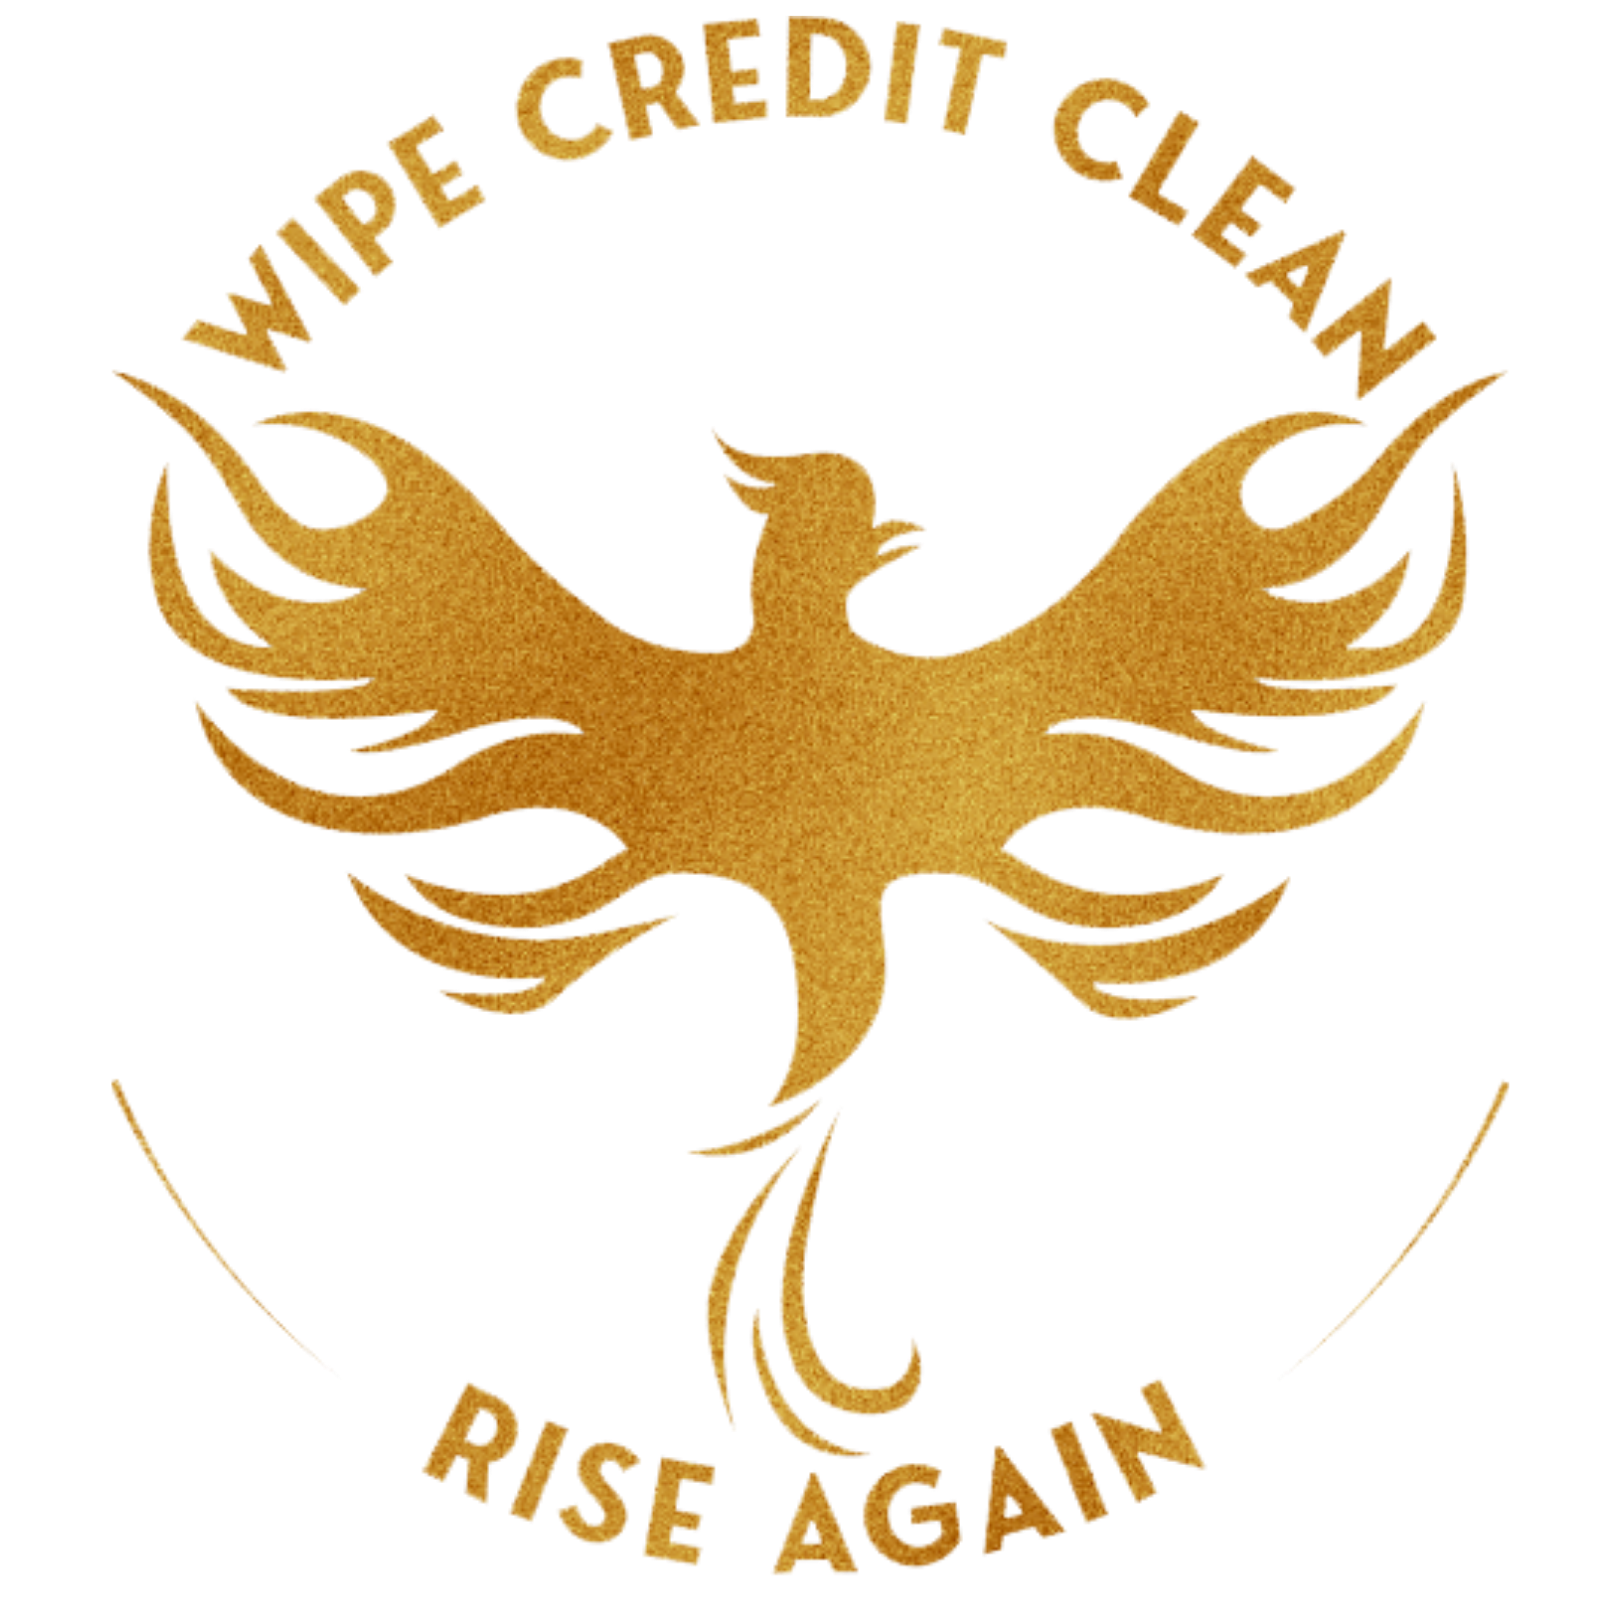 Wipe Credit Clean